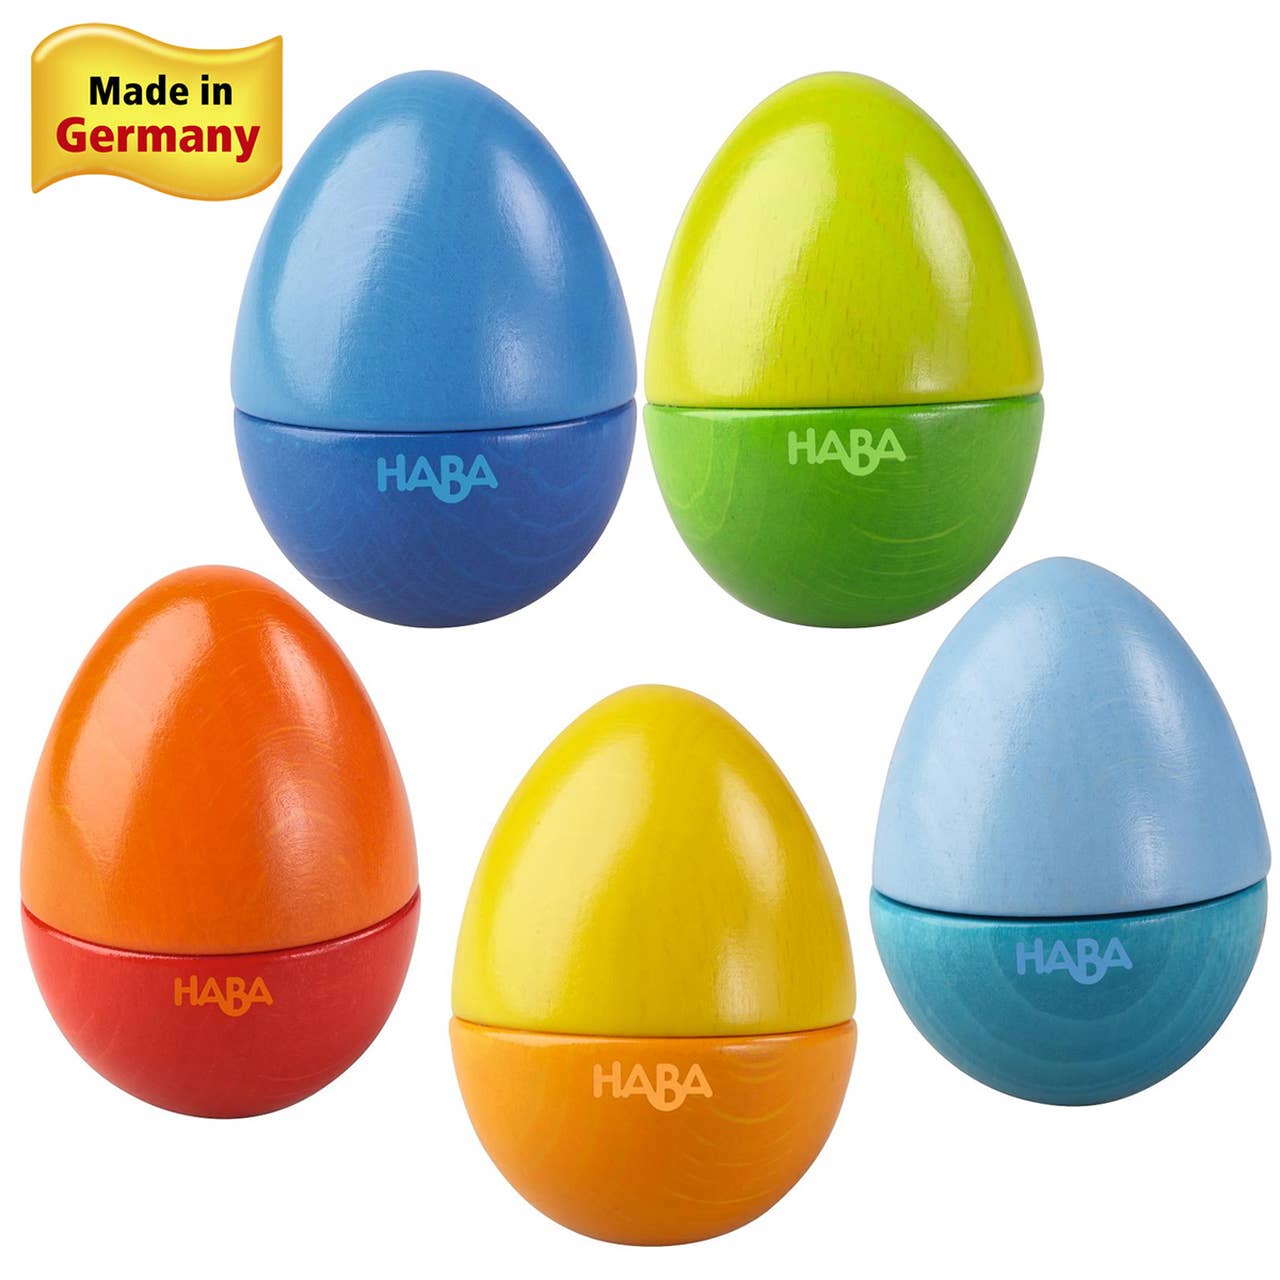 HABA's Musical Eggs